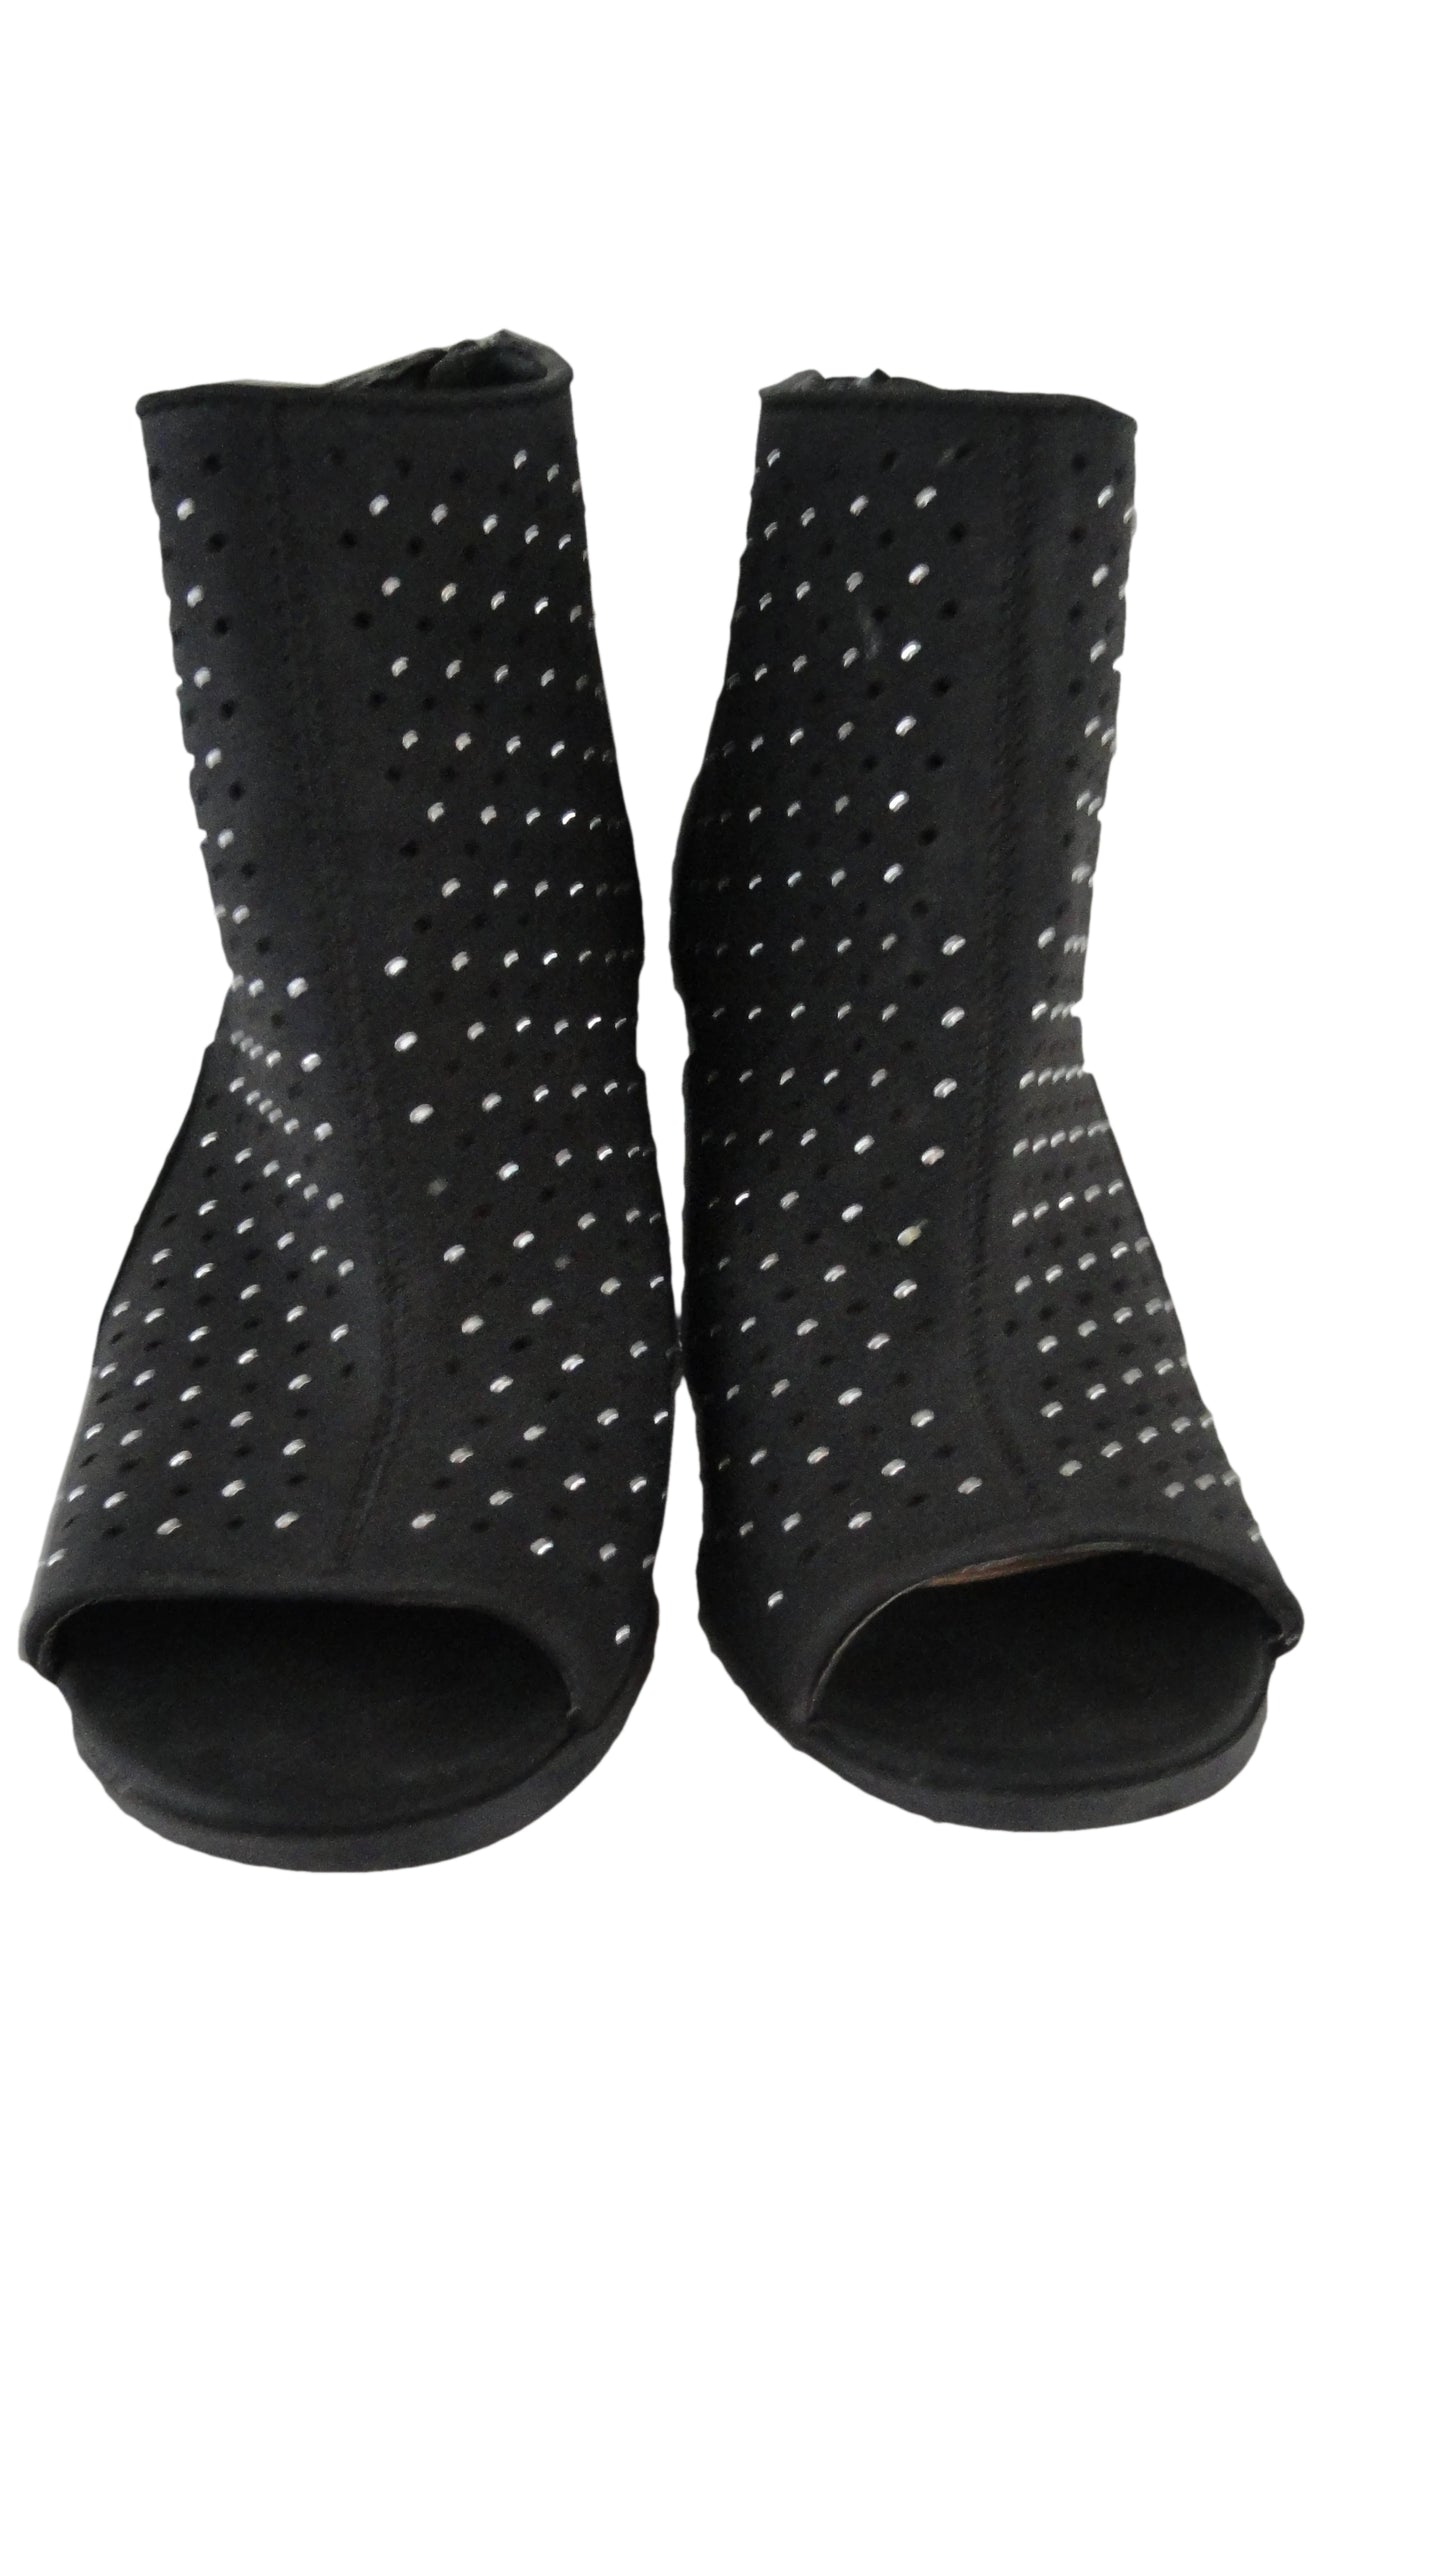 C Ankle Block Heel Booties Black with Silver Rhinestone Studs Size 3M SKU 000277-3